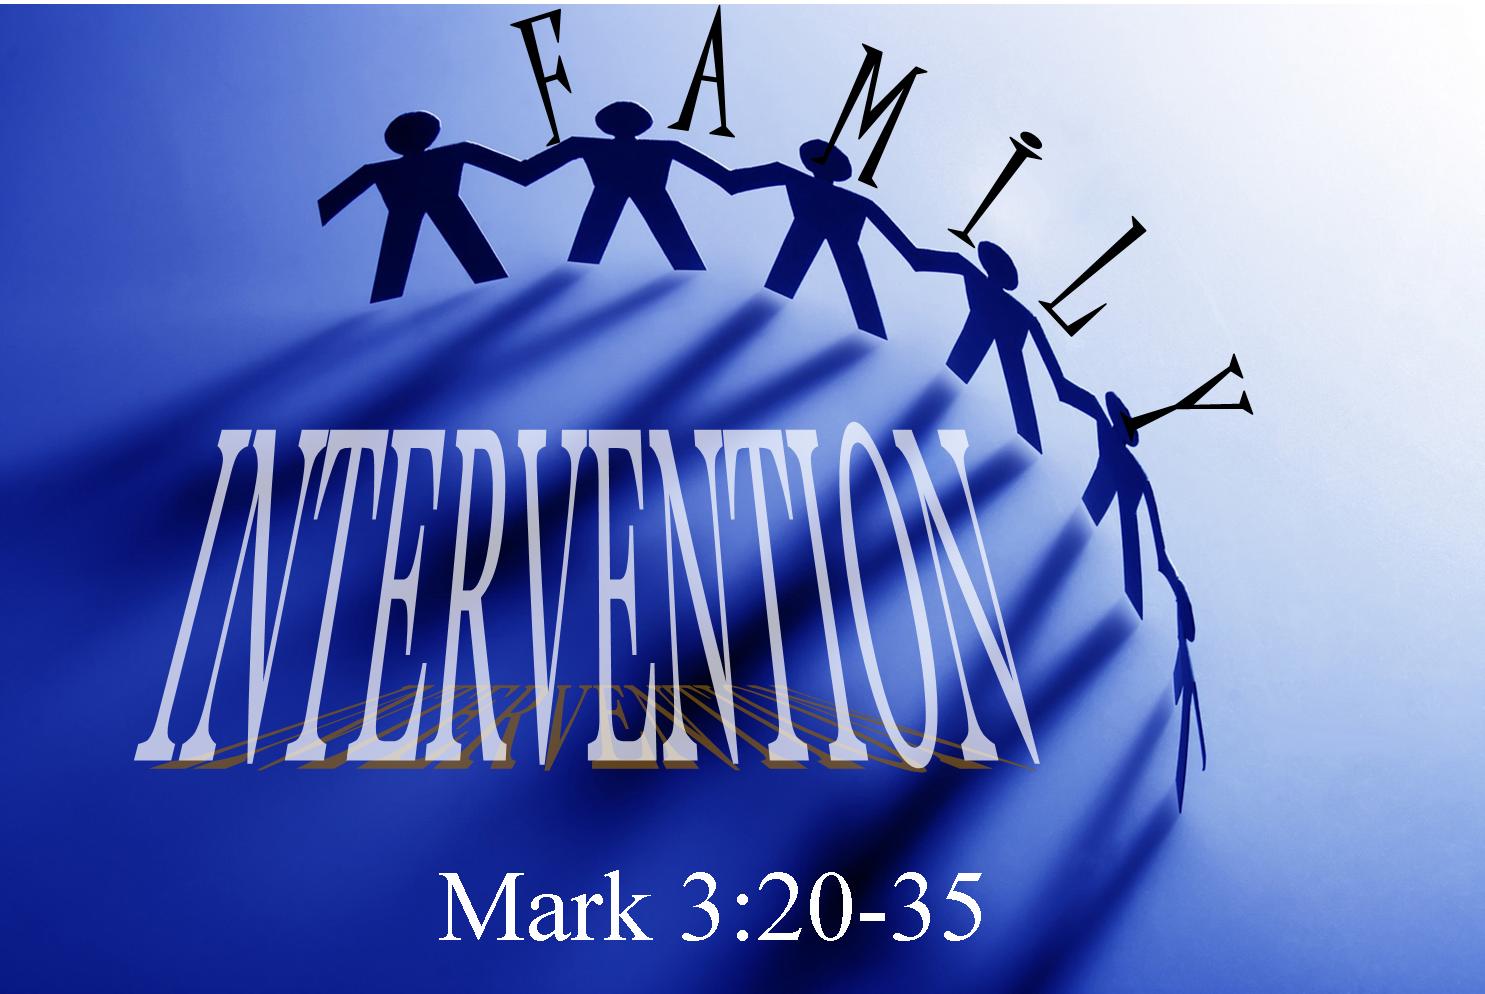 Mark 3:20-35, Intervention